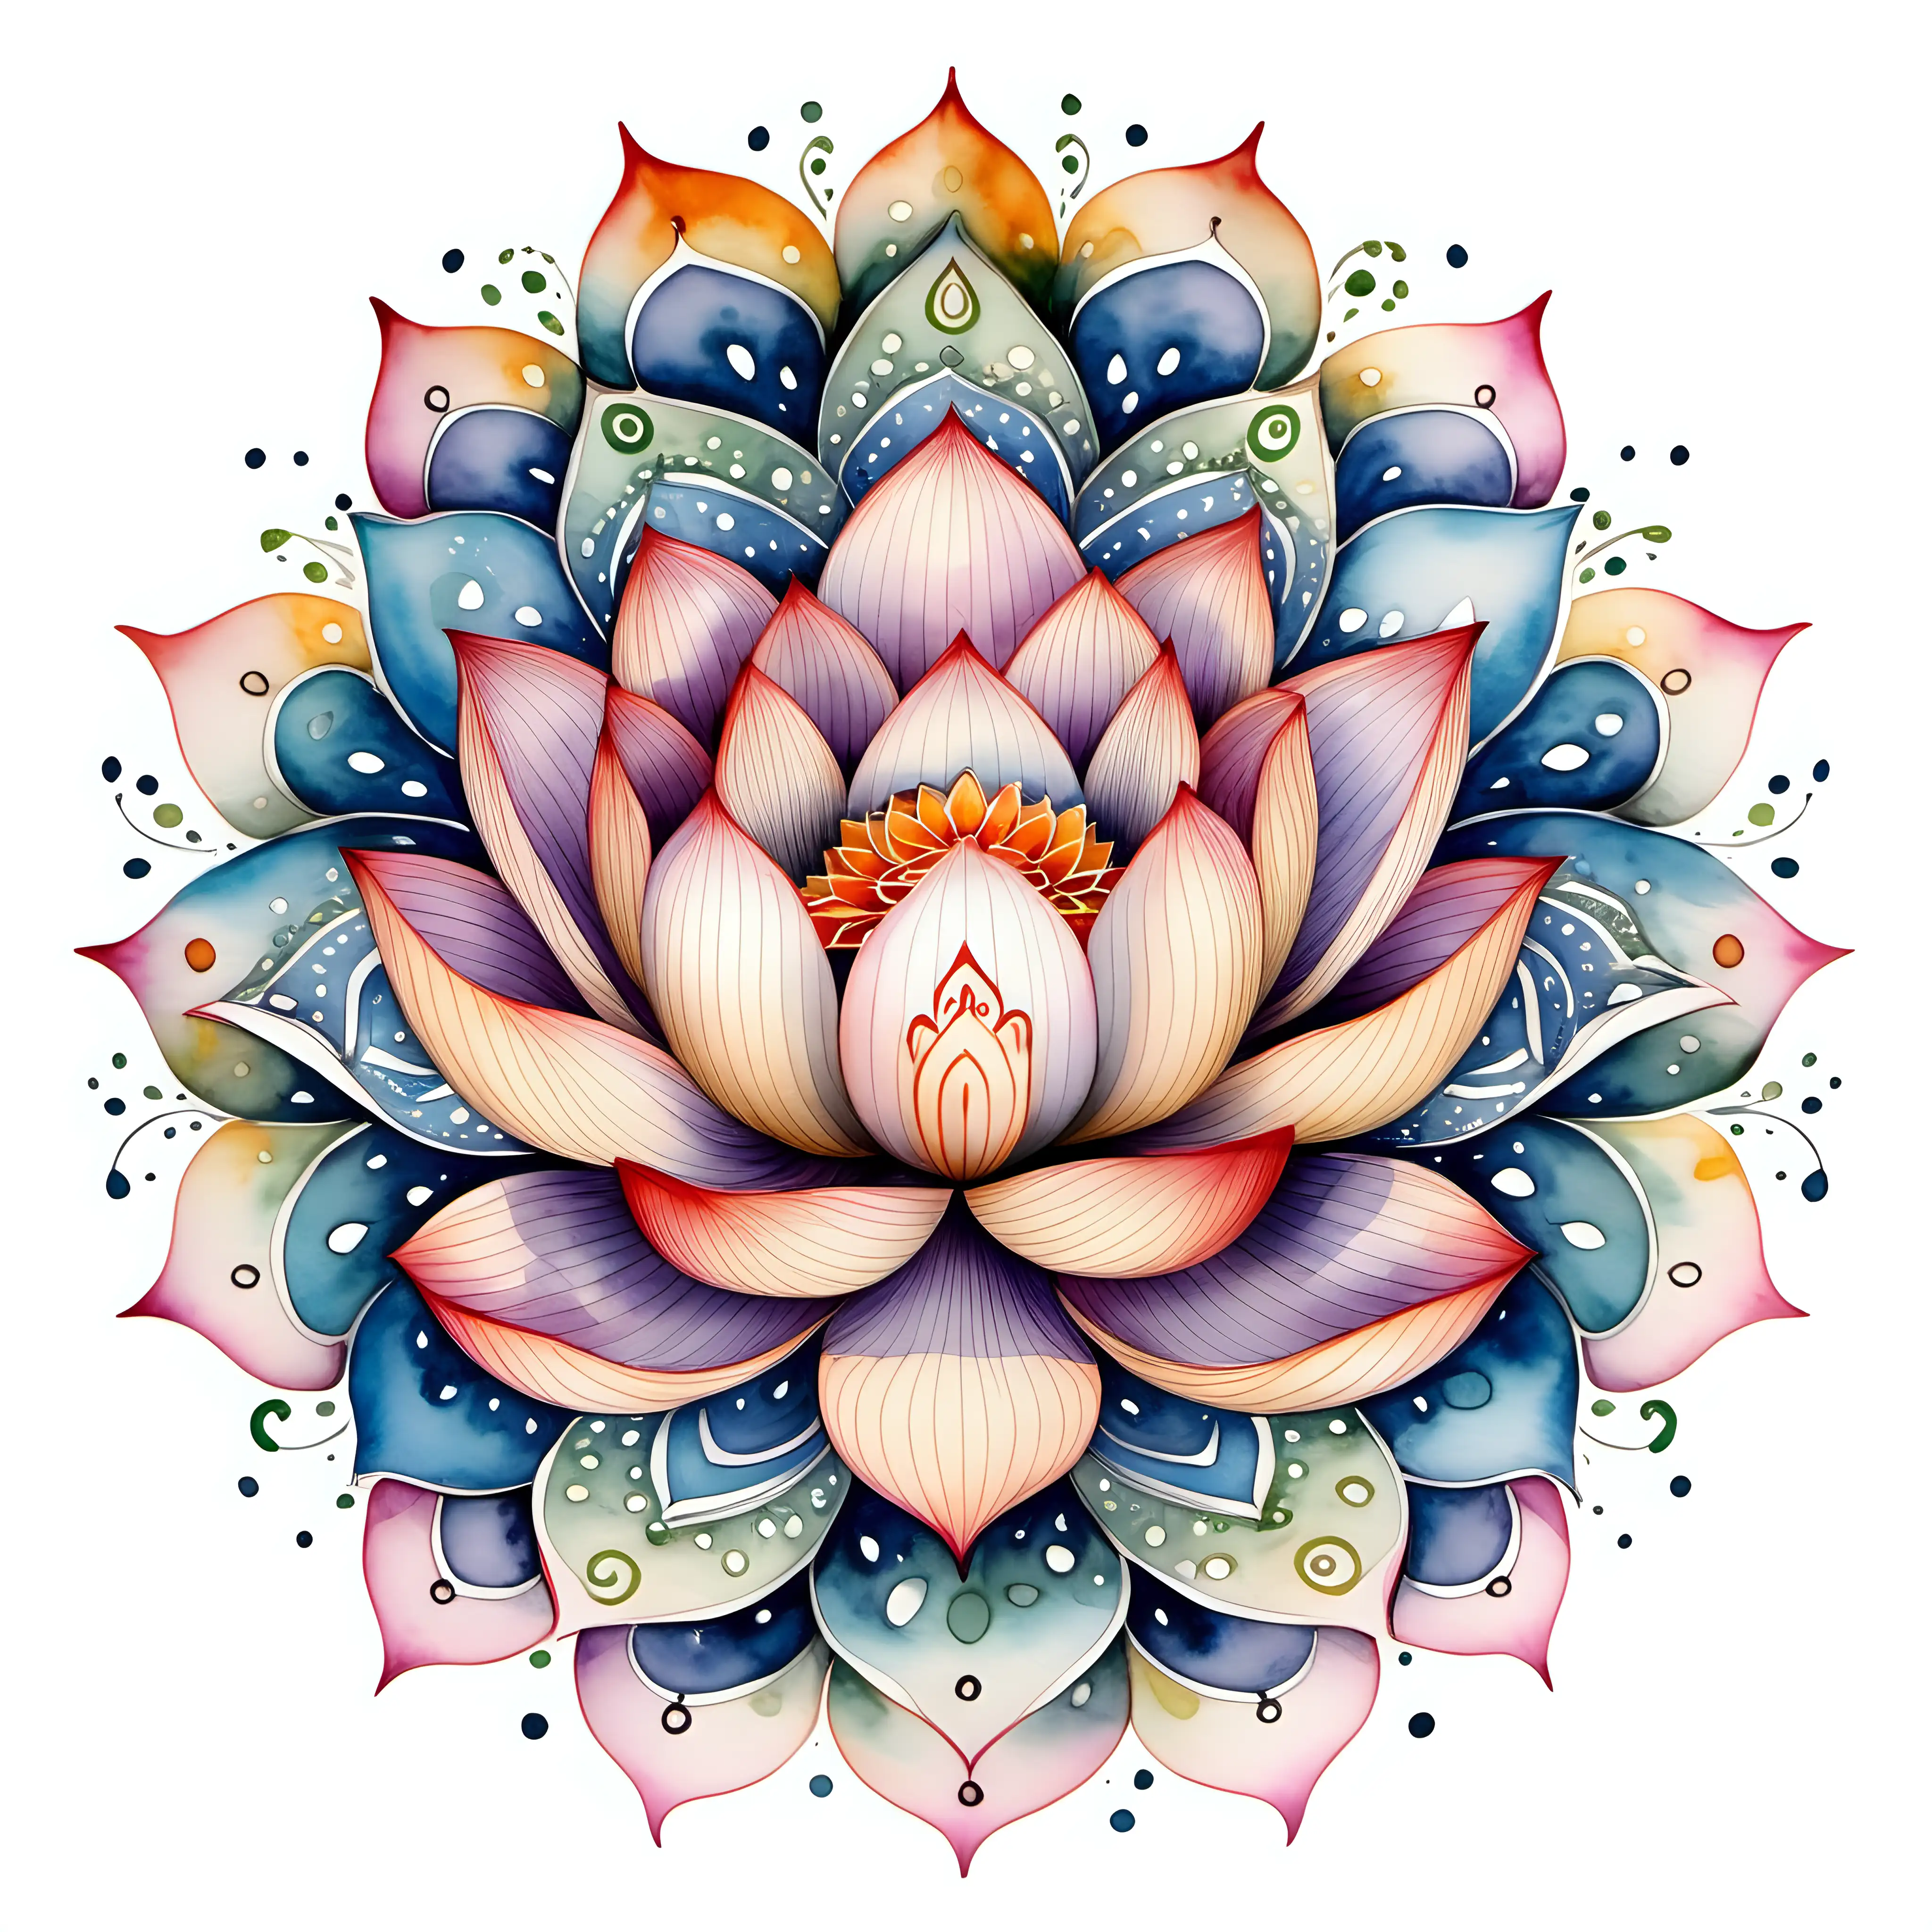 Fantasy Lotus Mandala Vibrant Watercolor Illustration on White Background